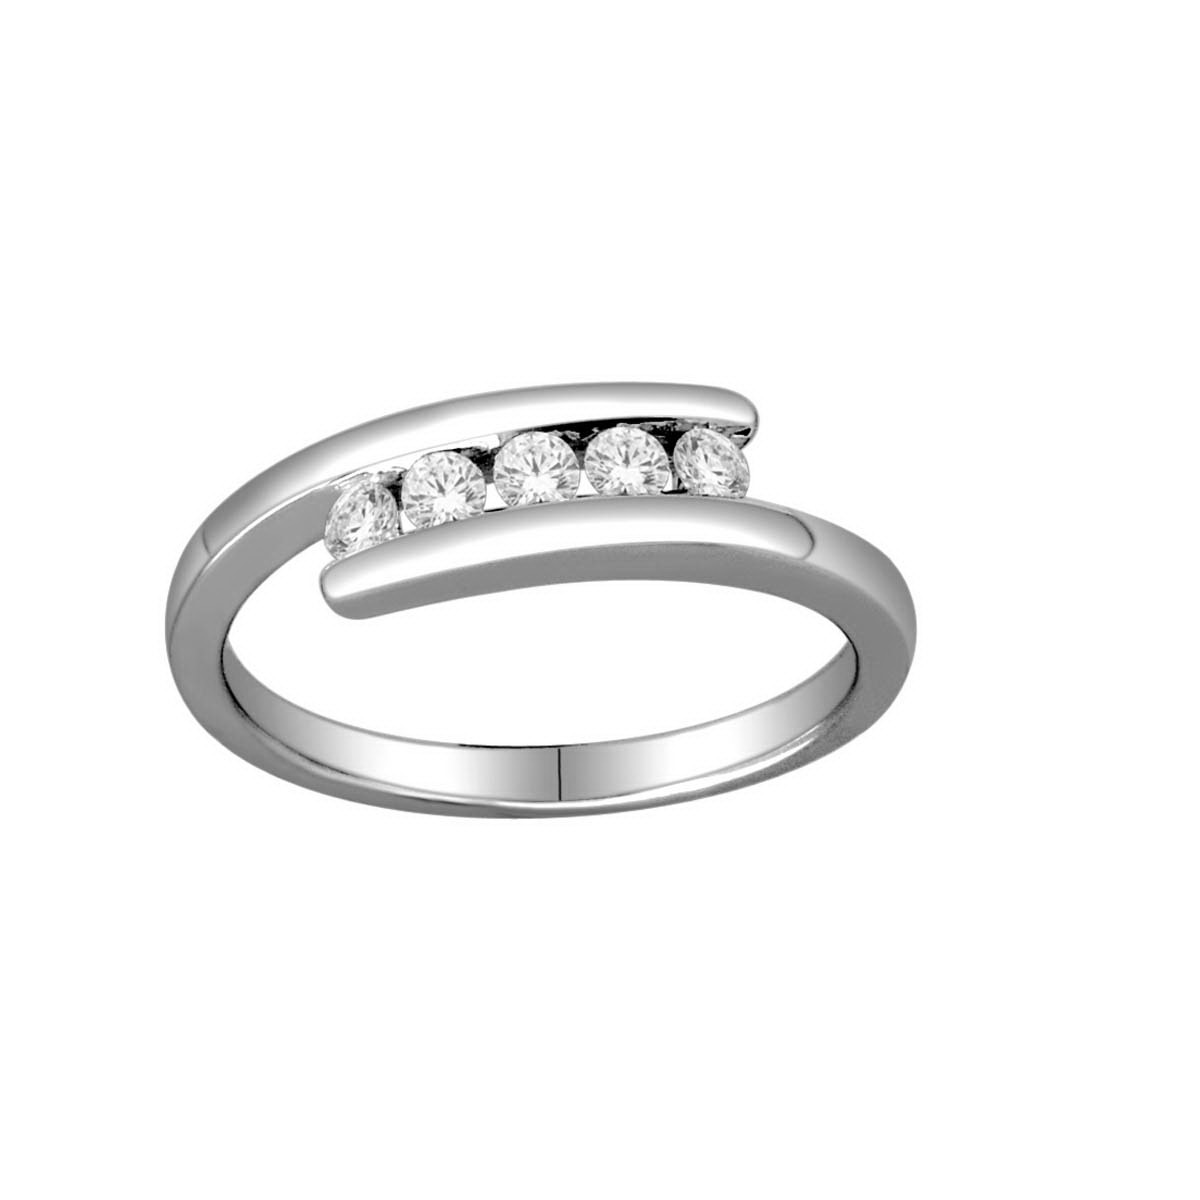 Manufacturers Exporters and Wholesale Suppliers of Diamond Wedding Rings Mumbai Maharashtra